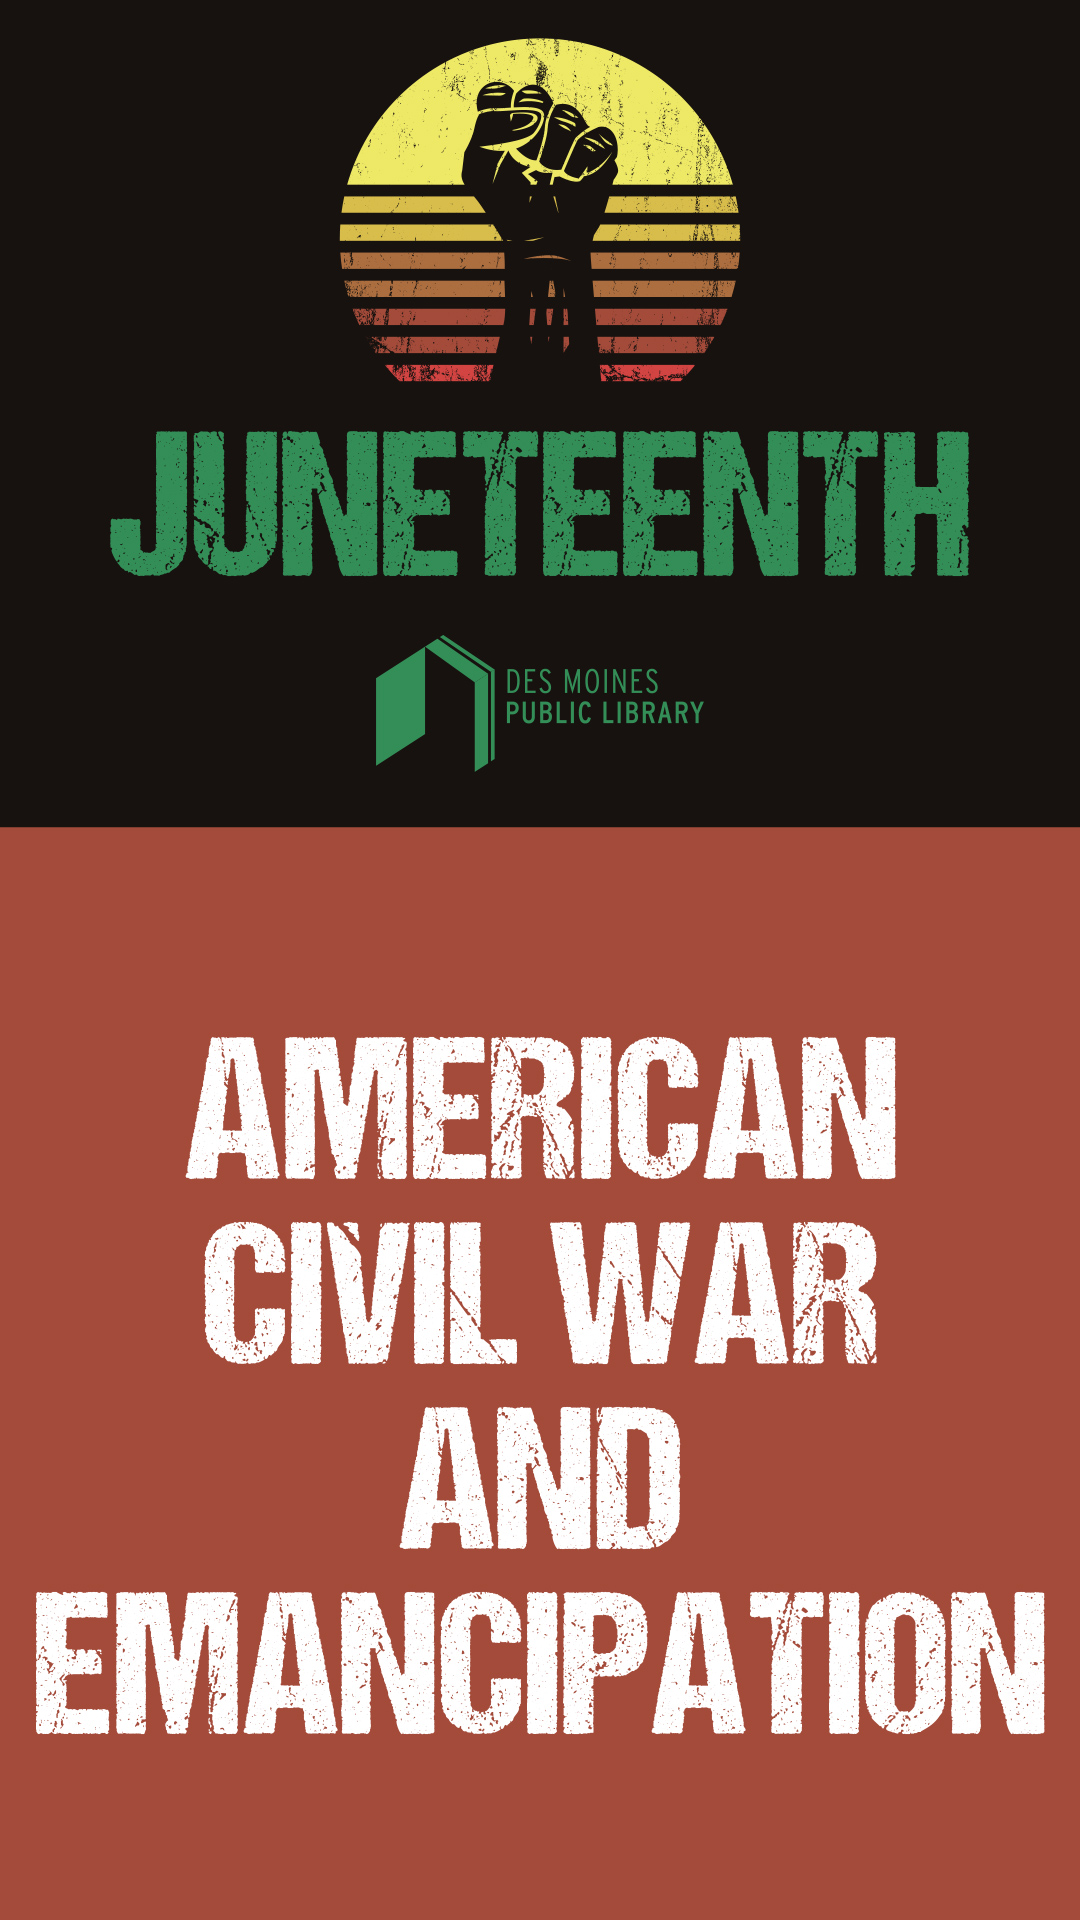 Juneteenth Civil War and Emancipation